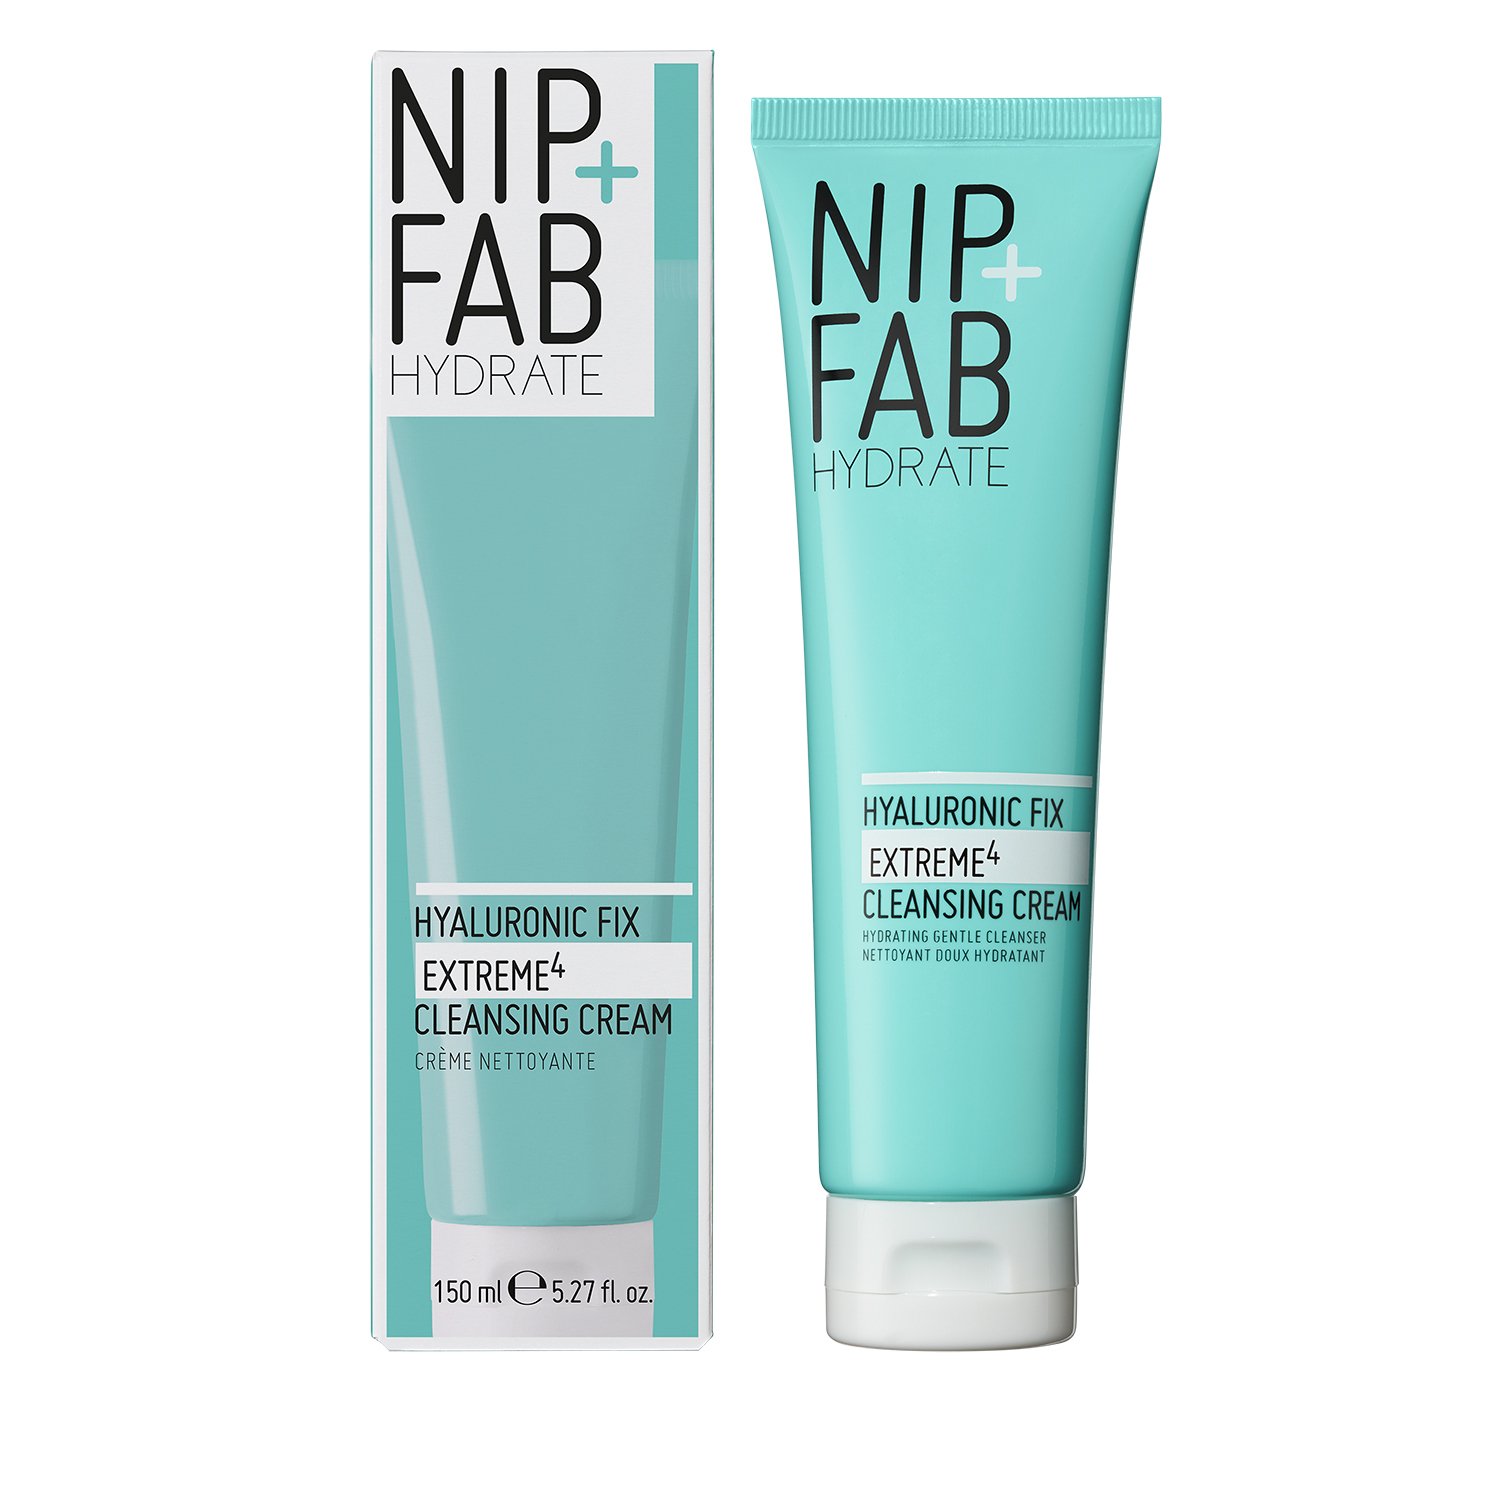 NIP+FAB Hyaluronic Fix Extreme4 Cleansing Cream 150 ml